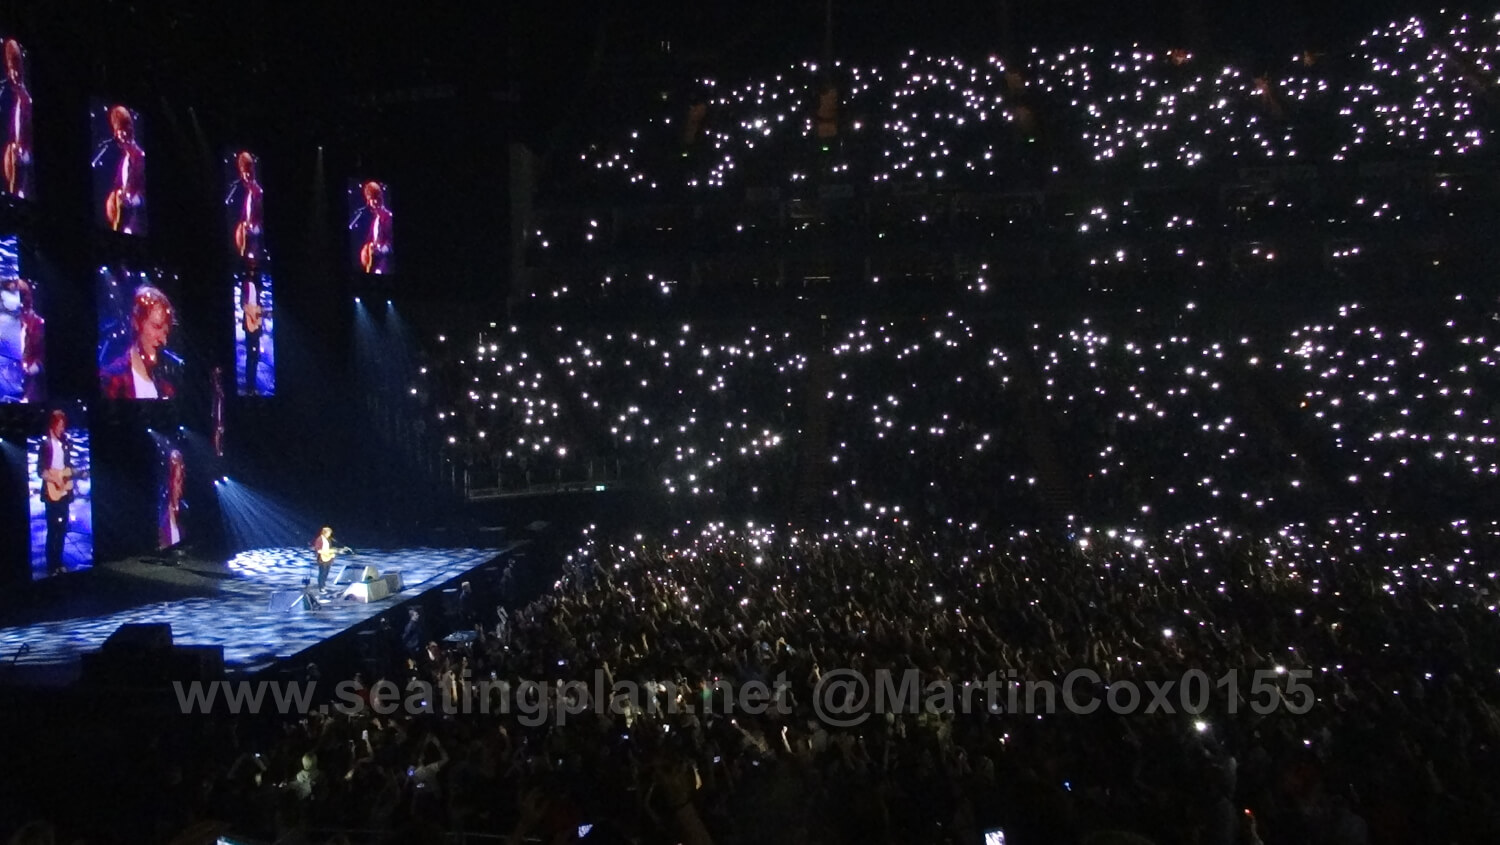 View of Ed Sheeran at The O2 Arena from Seat Block 101